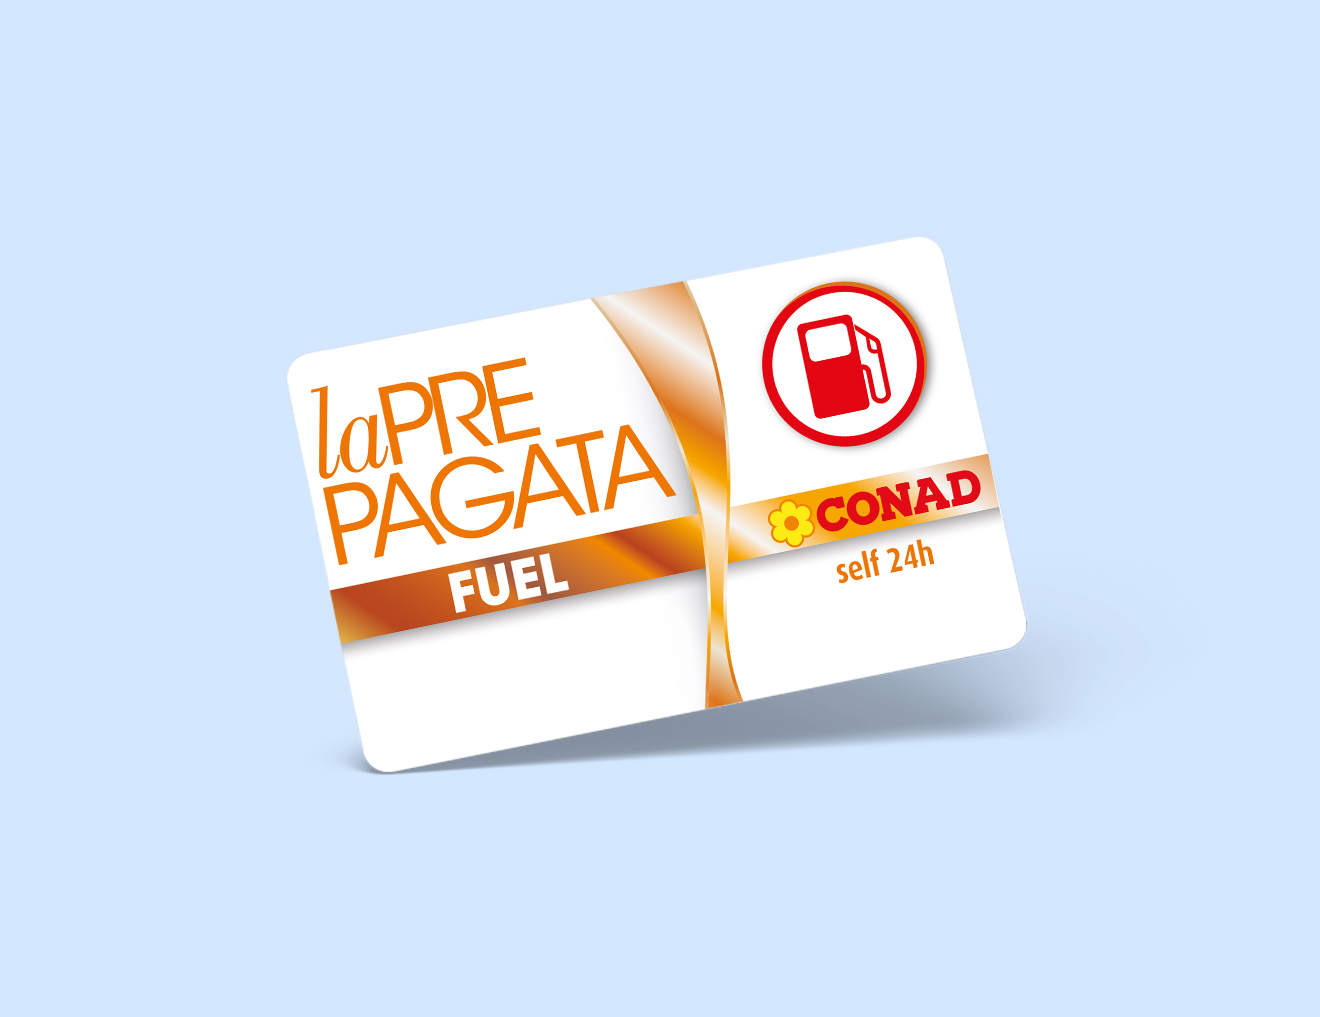 La Prepagata Fuel | Conad